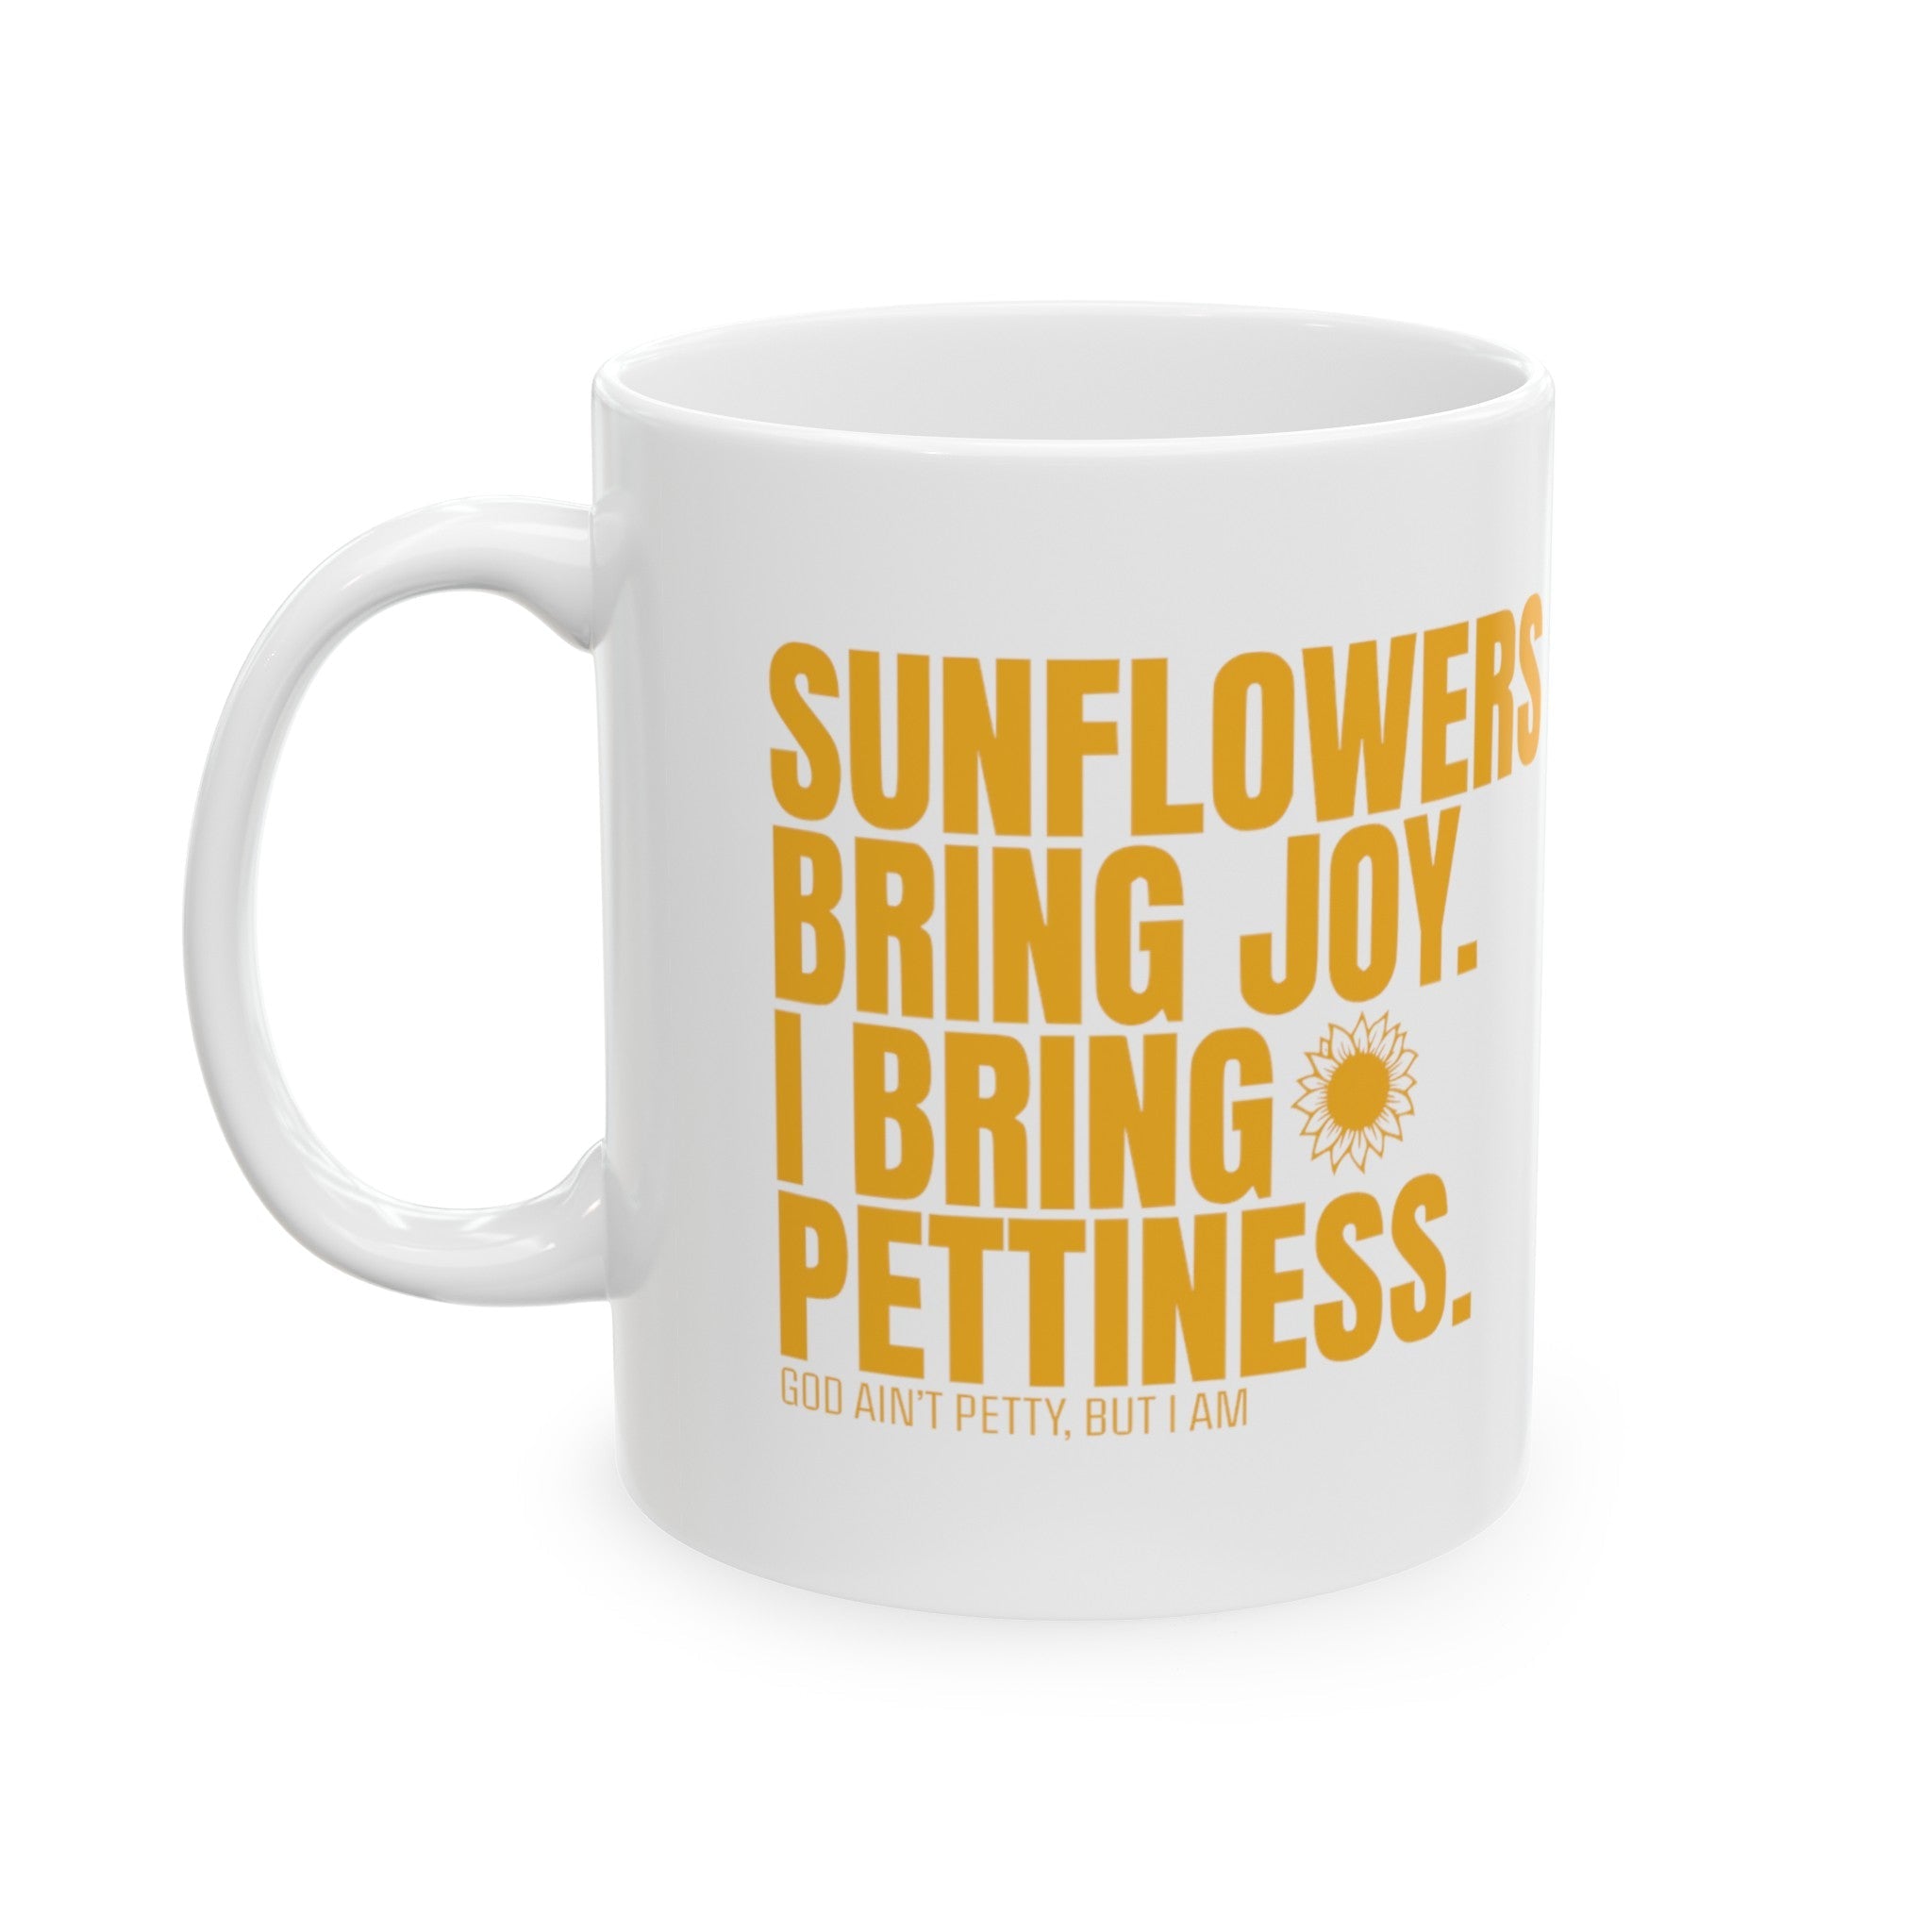 Sunflowers bring joy. I bring Pettiness Mug 11oz ( White & Gold)-Mug-The Original God Ain't Petty But I Am